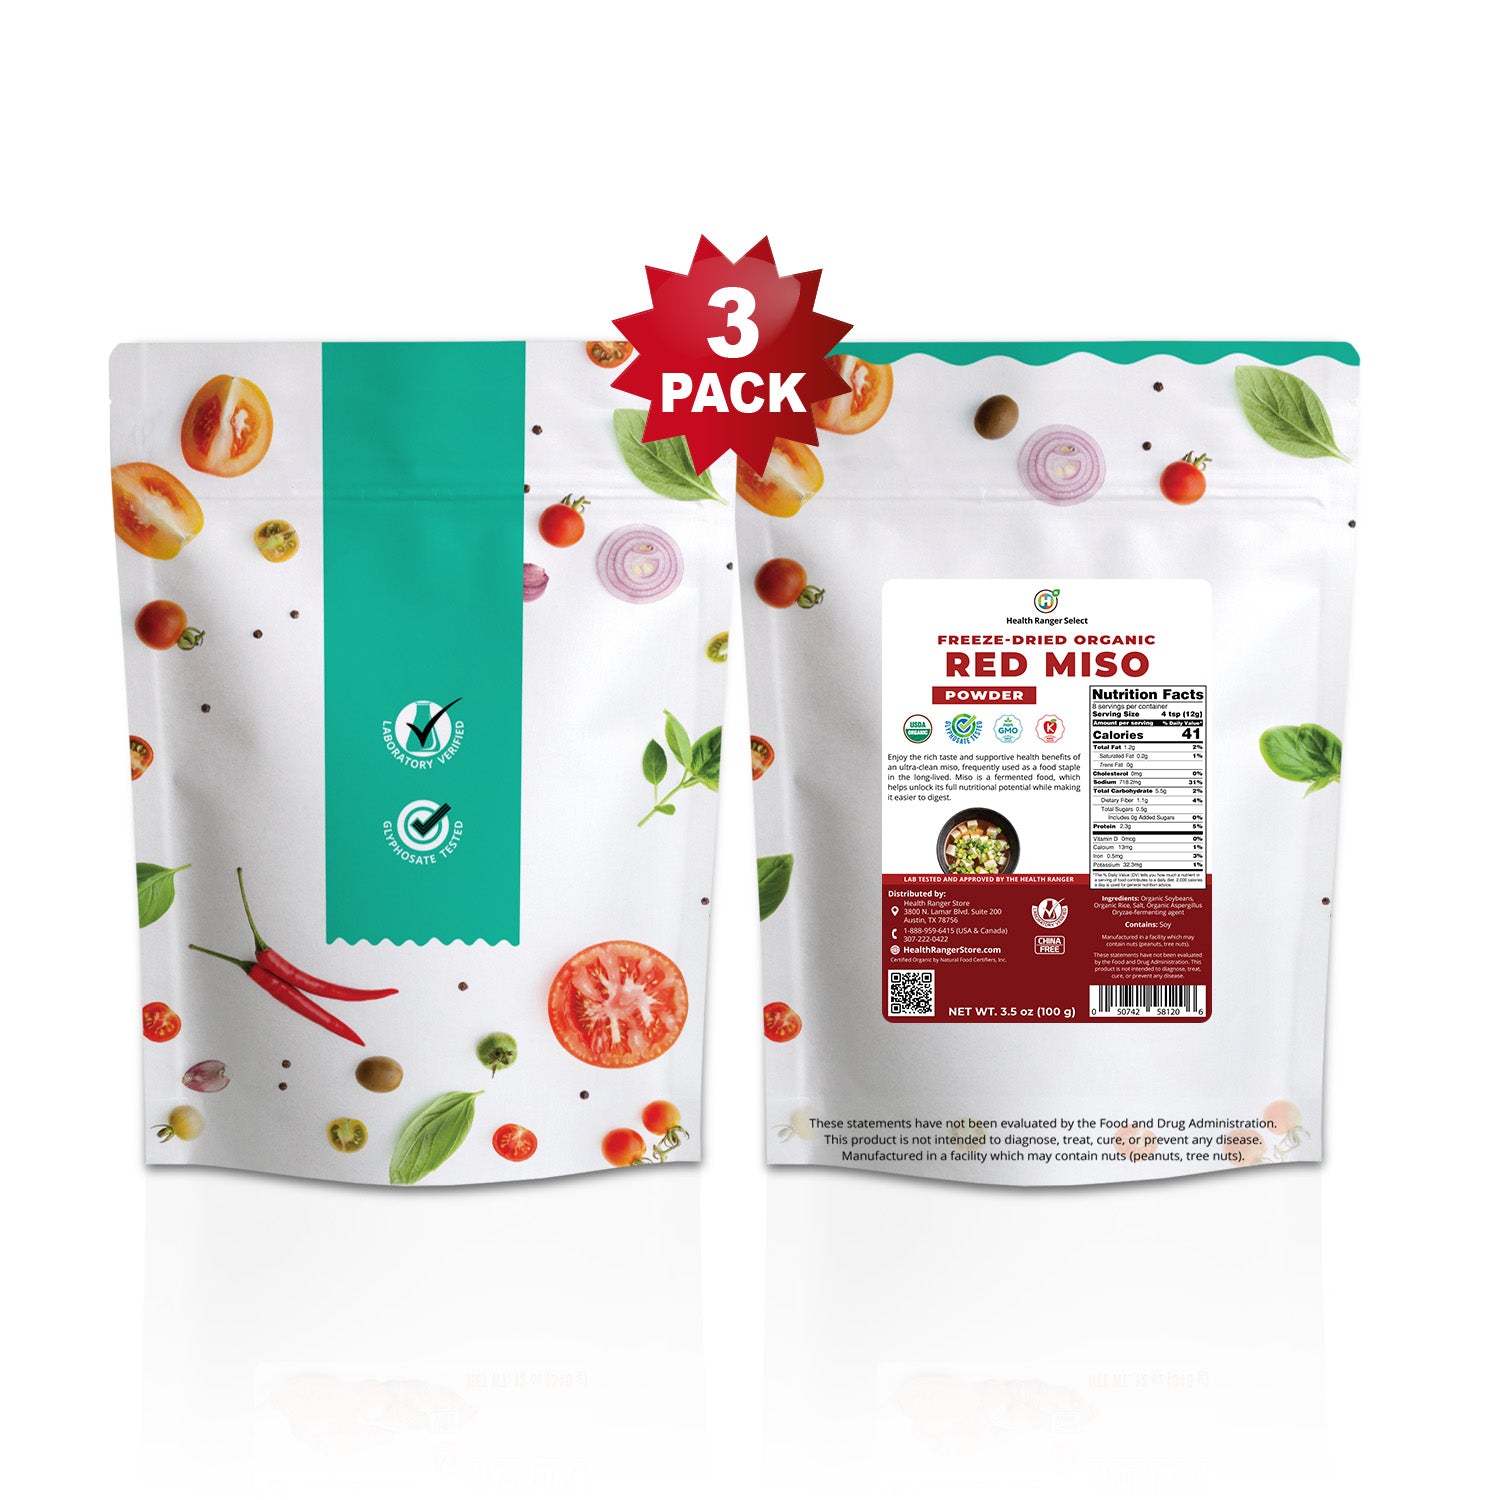 Freeze Dried Organic Red Miso Powder 3.5oz (100g) (3-Pack)